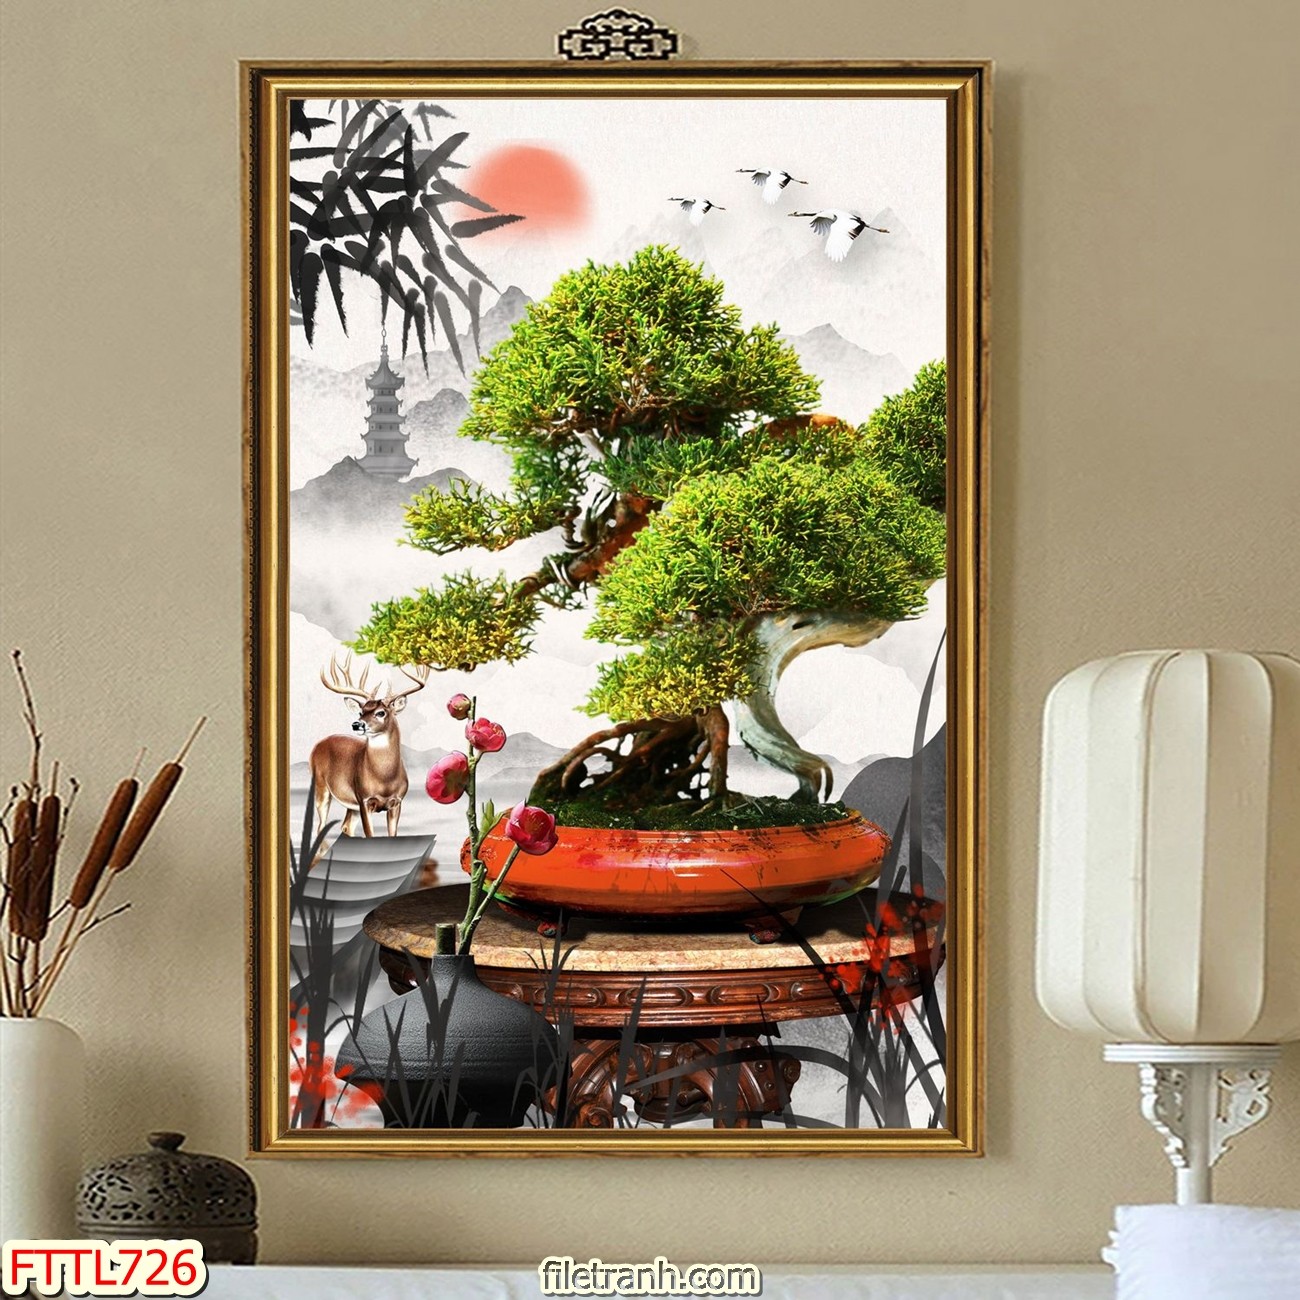 https://filetranh.com/file-tranh-chau-mai-bonsai/file-tranh-chau-mai-bonsai-fttl726.html